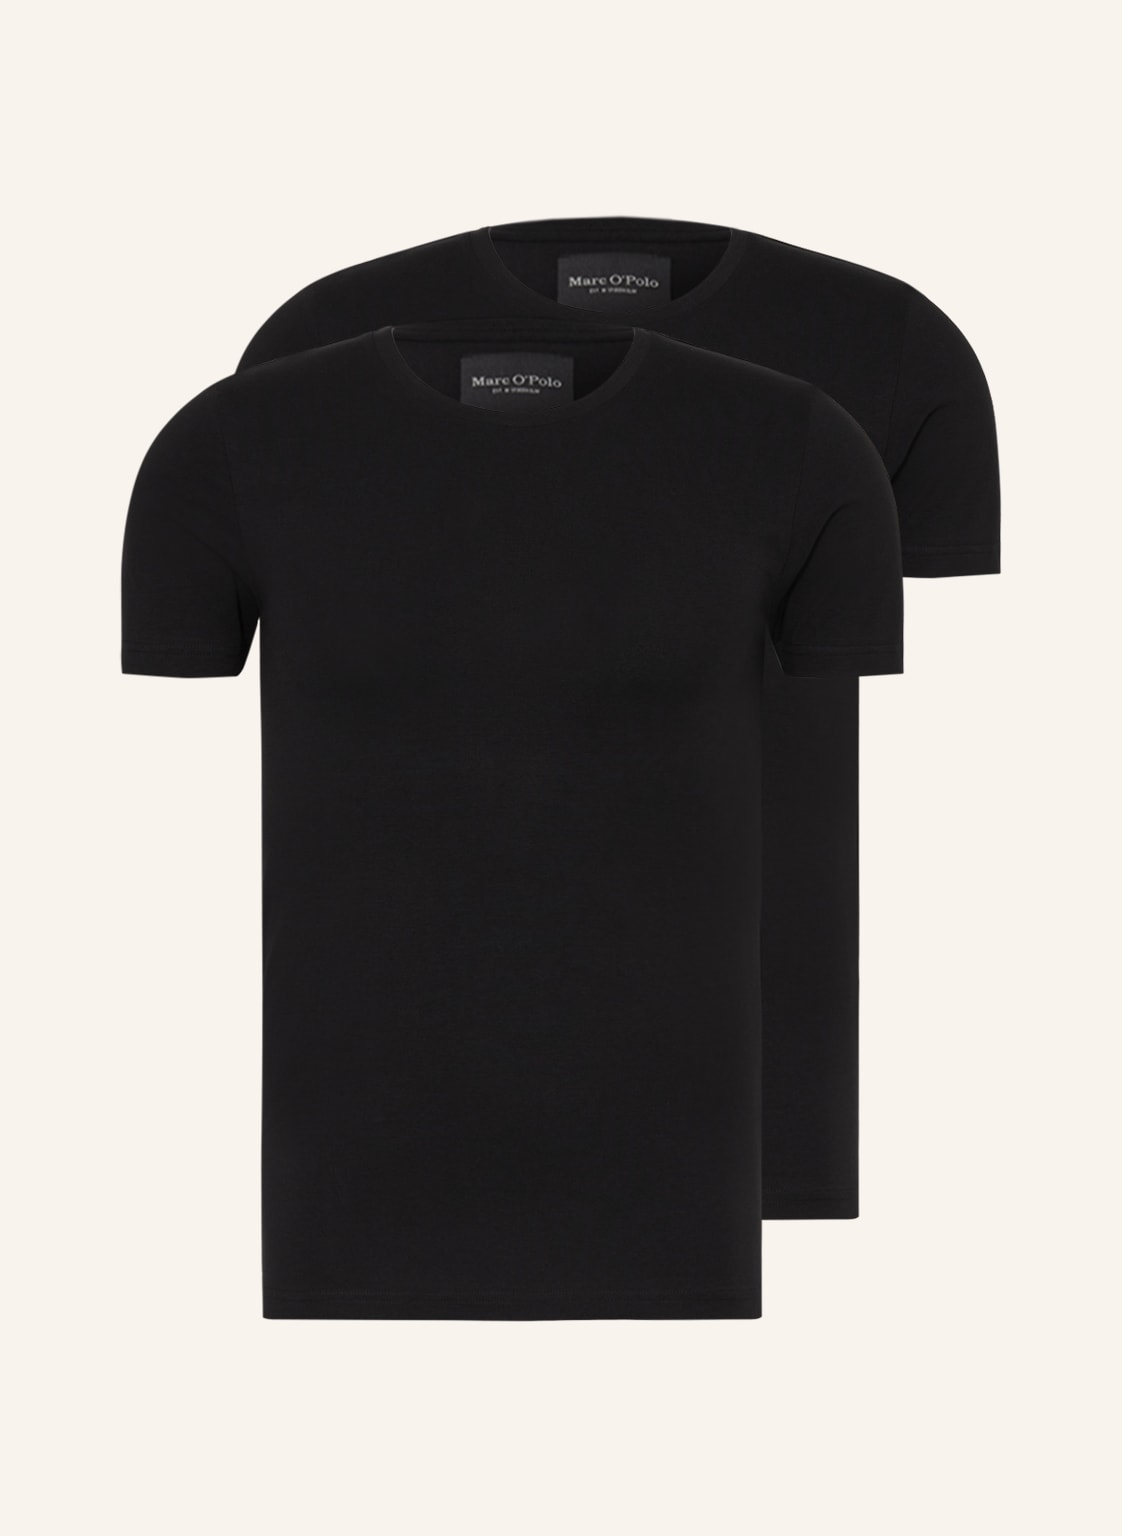 Image of Marc O'polo 2er-Pack T-Shirts Essentials schwarz